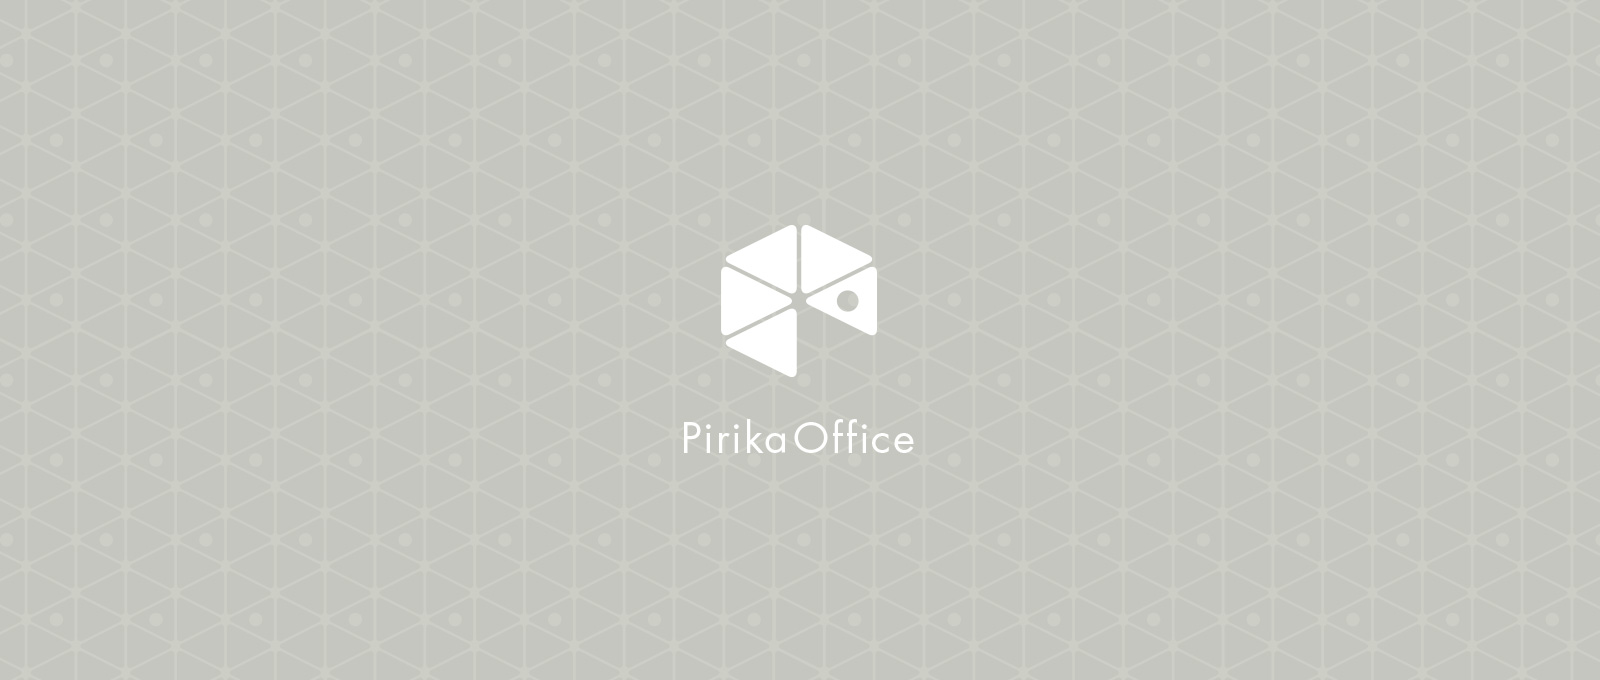 pirika office